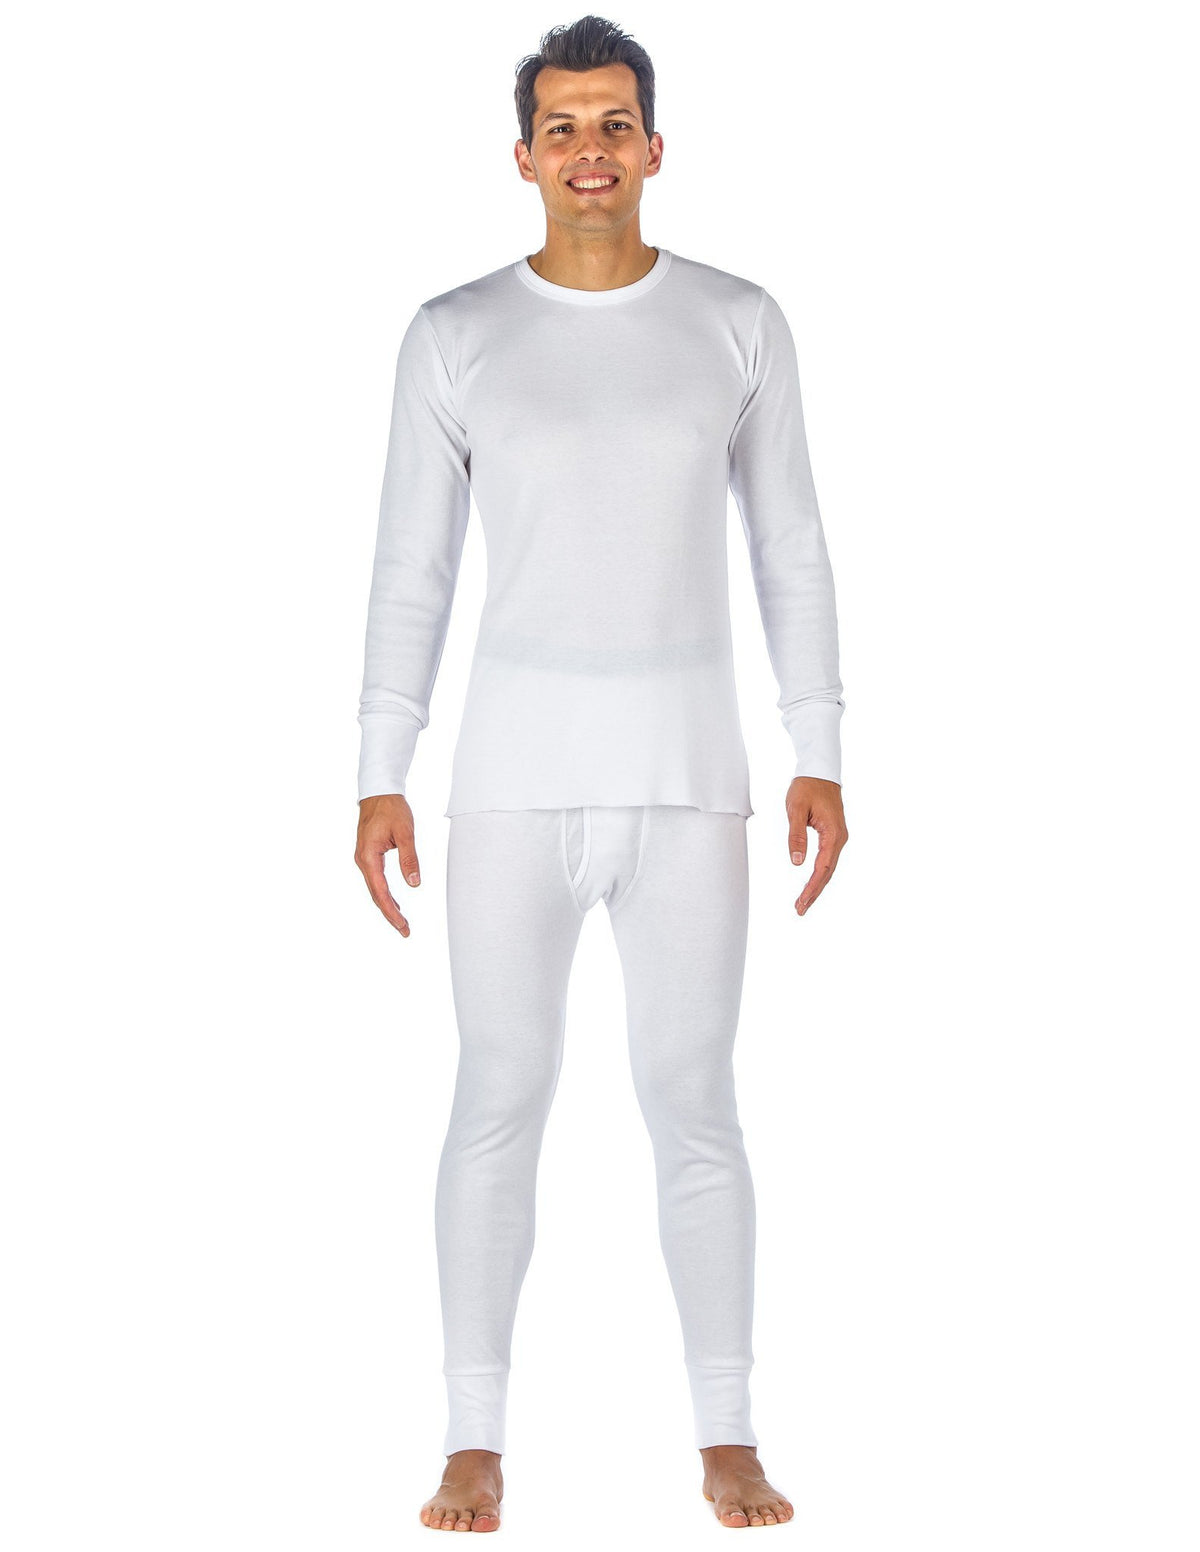 Men's 'Soft Comfort' Premium Thermal Set - White